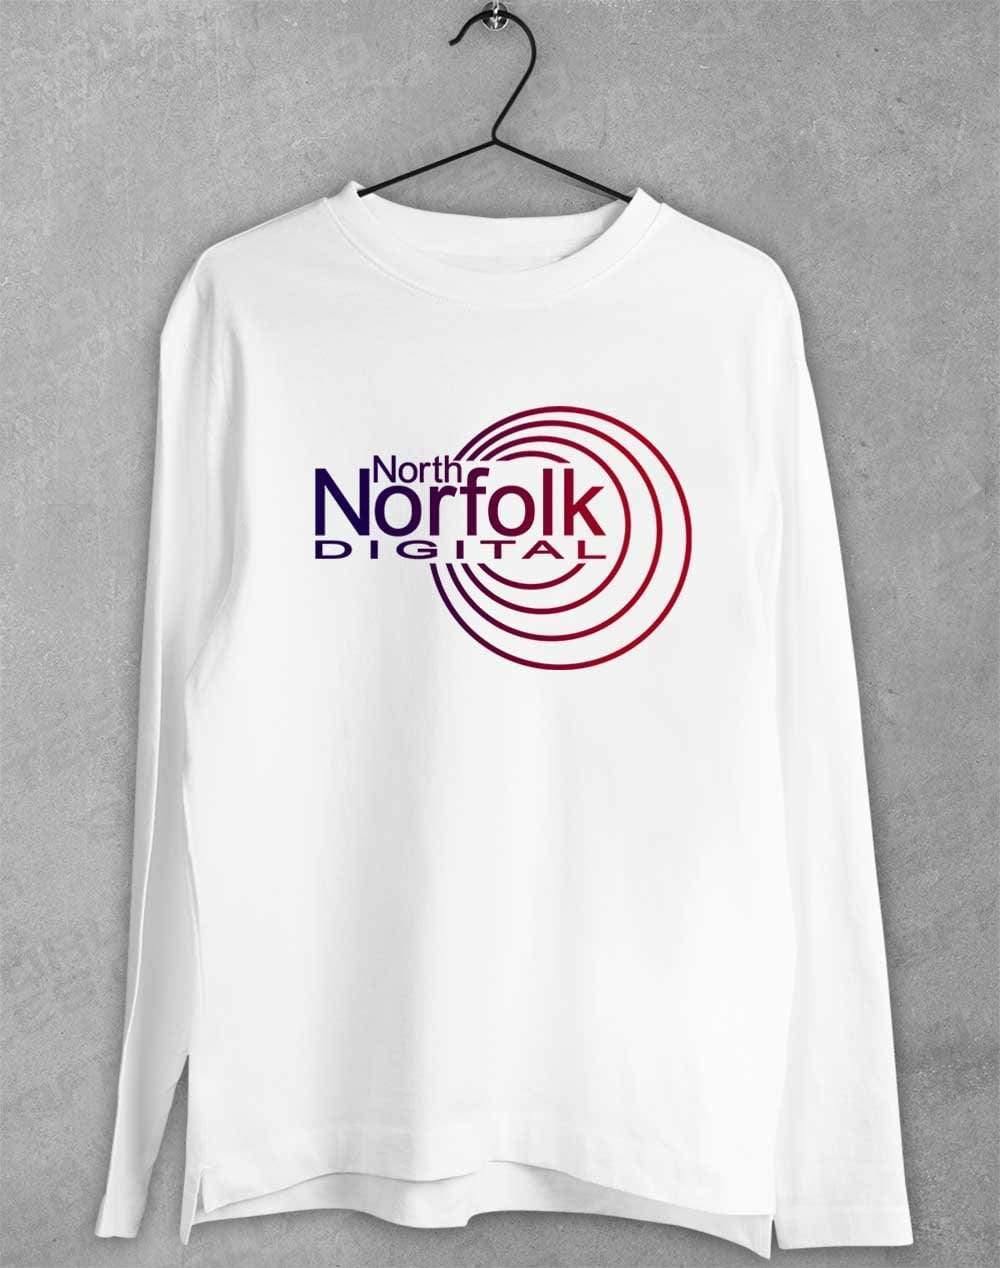 North Norfolk Digital Long Sleeve T-Shirt S / White  - Off World Tees